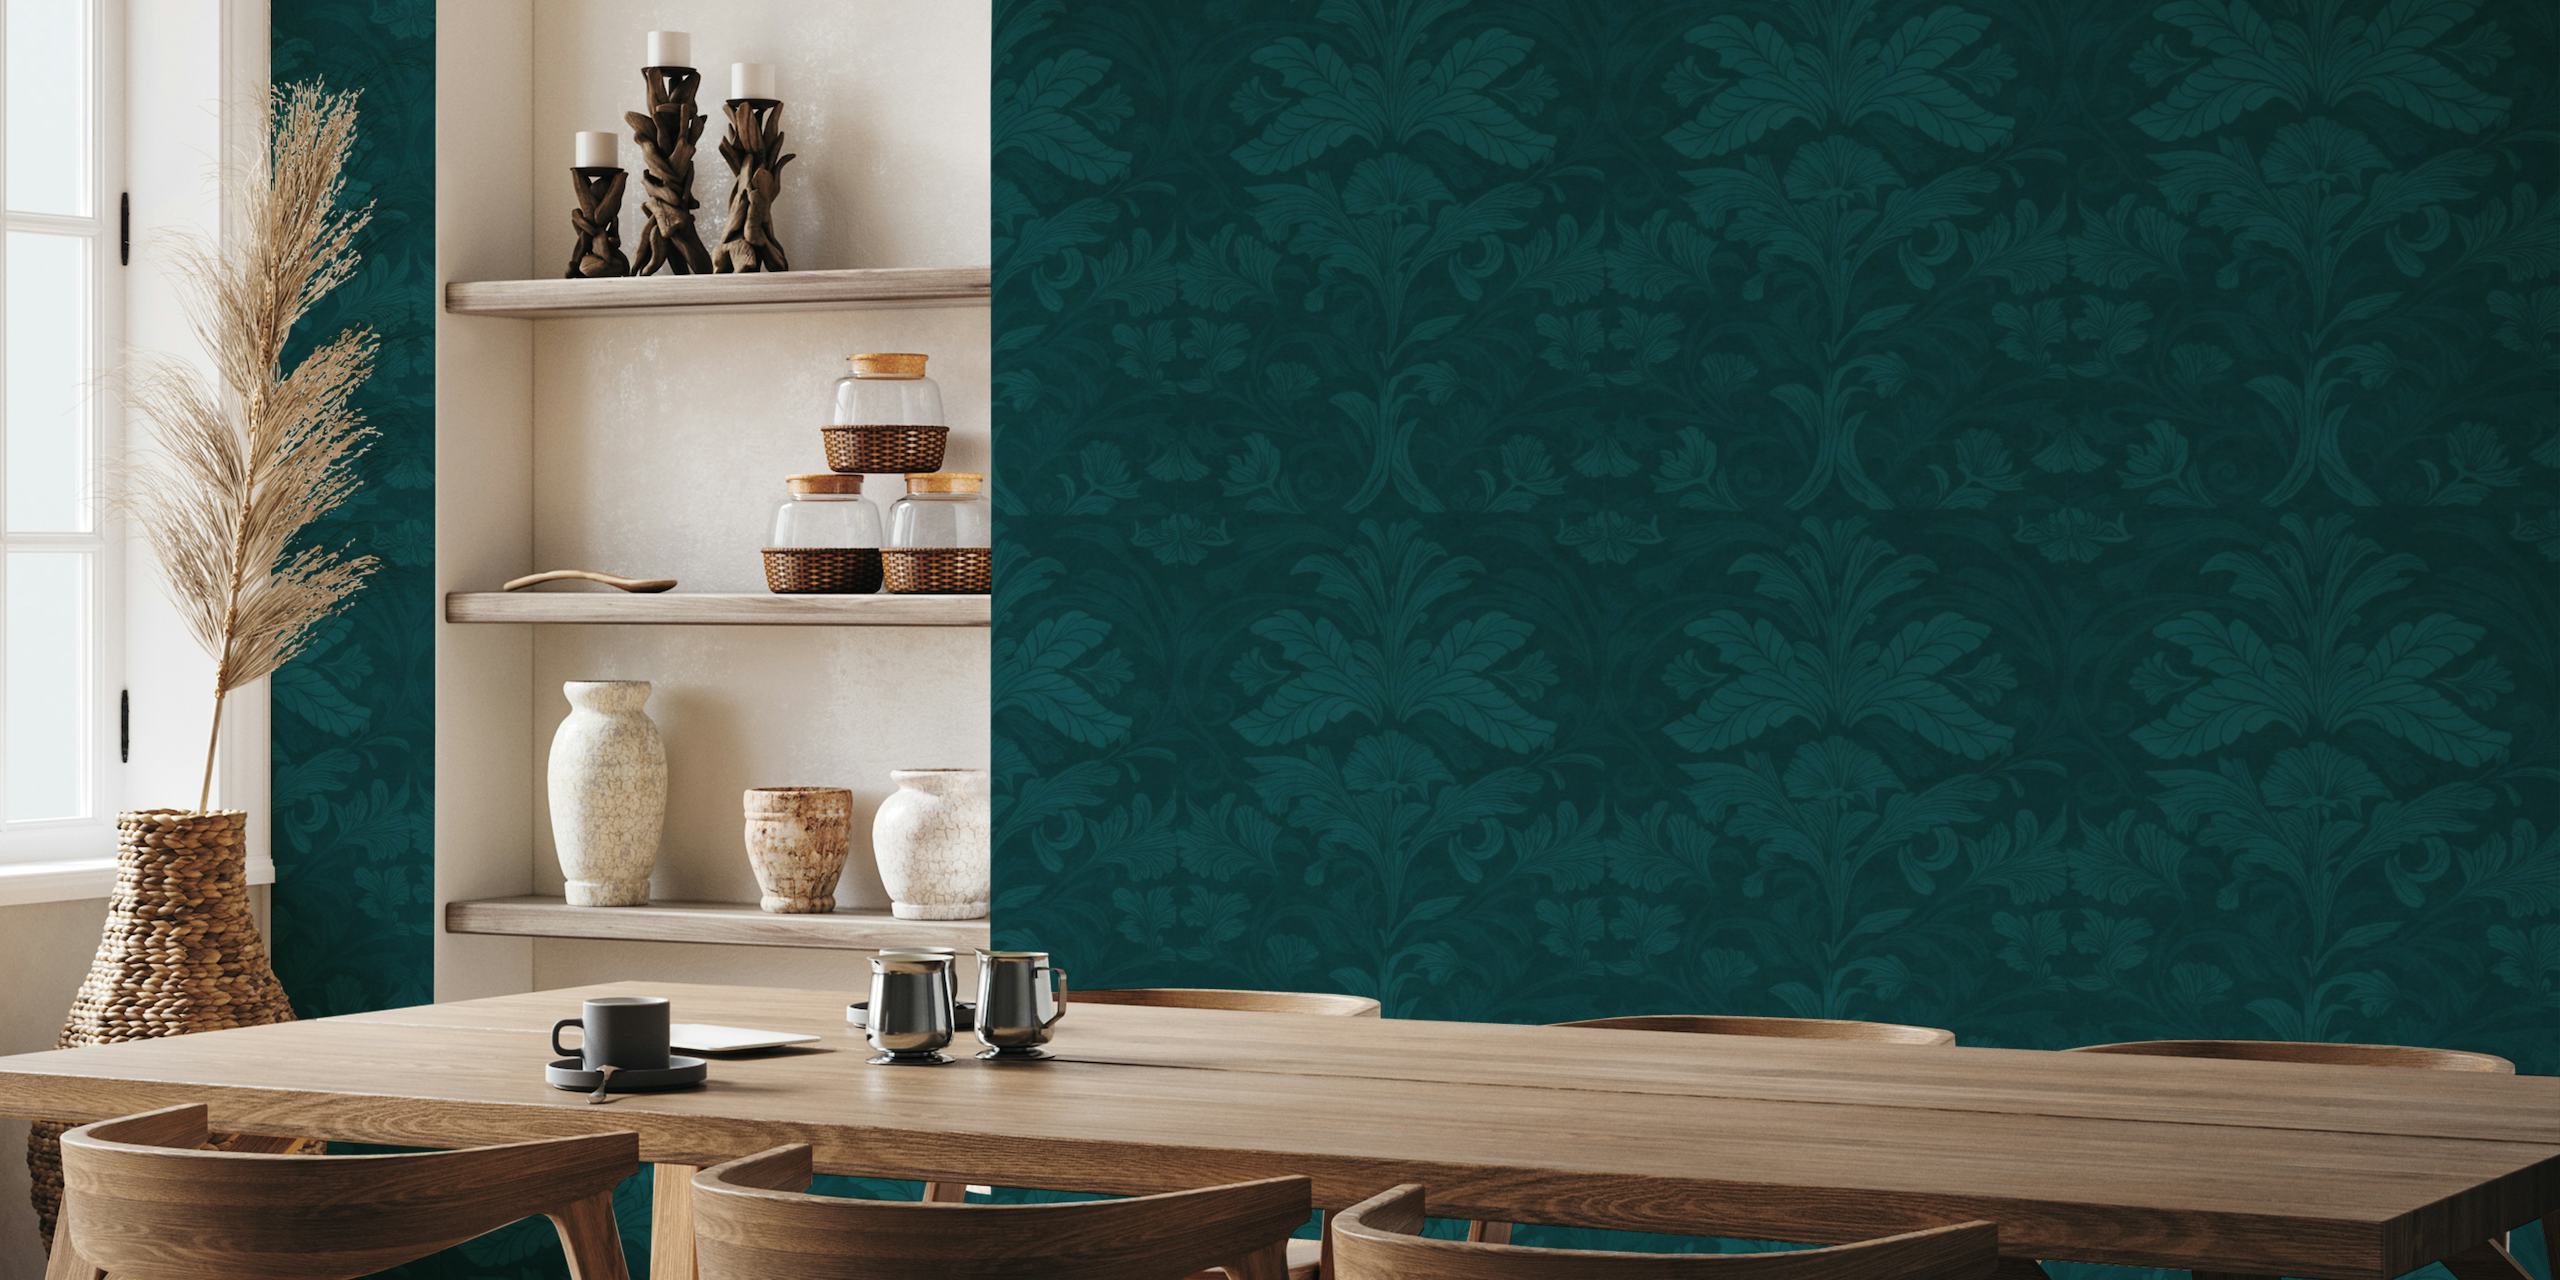 William Morris Style Monochrome Flourish Damask Emerald Teal wallpaper